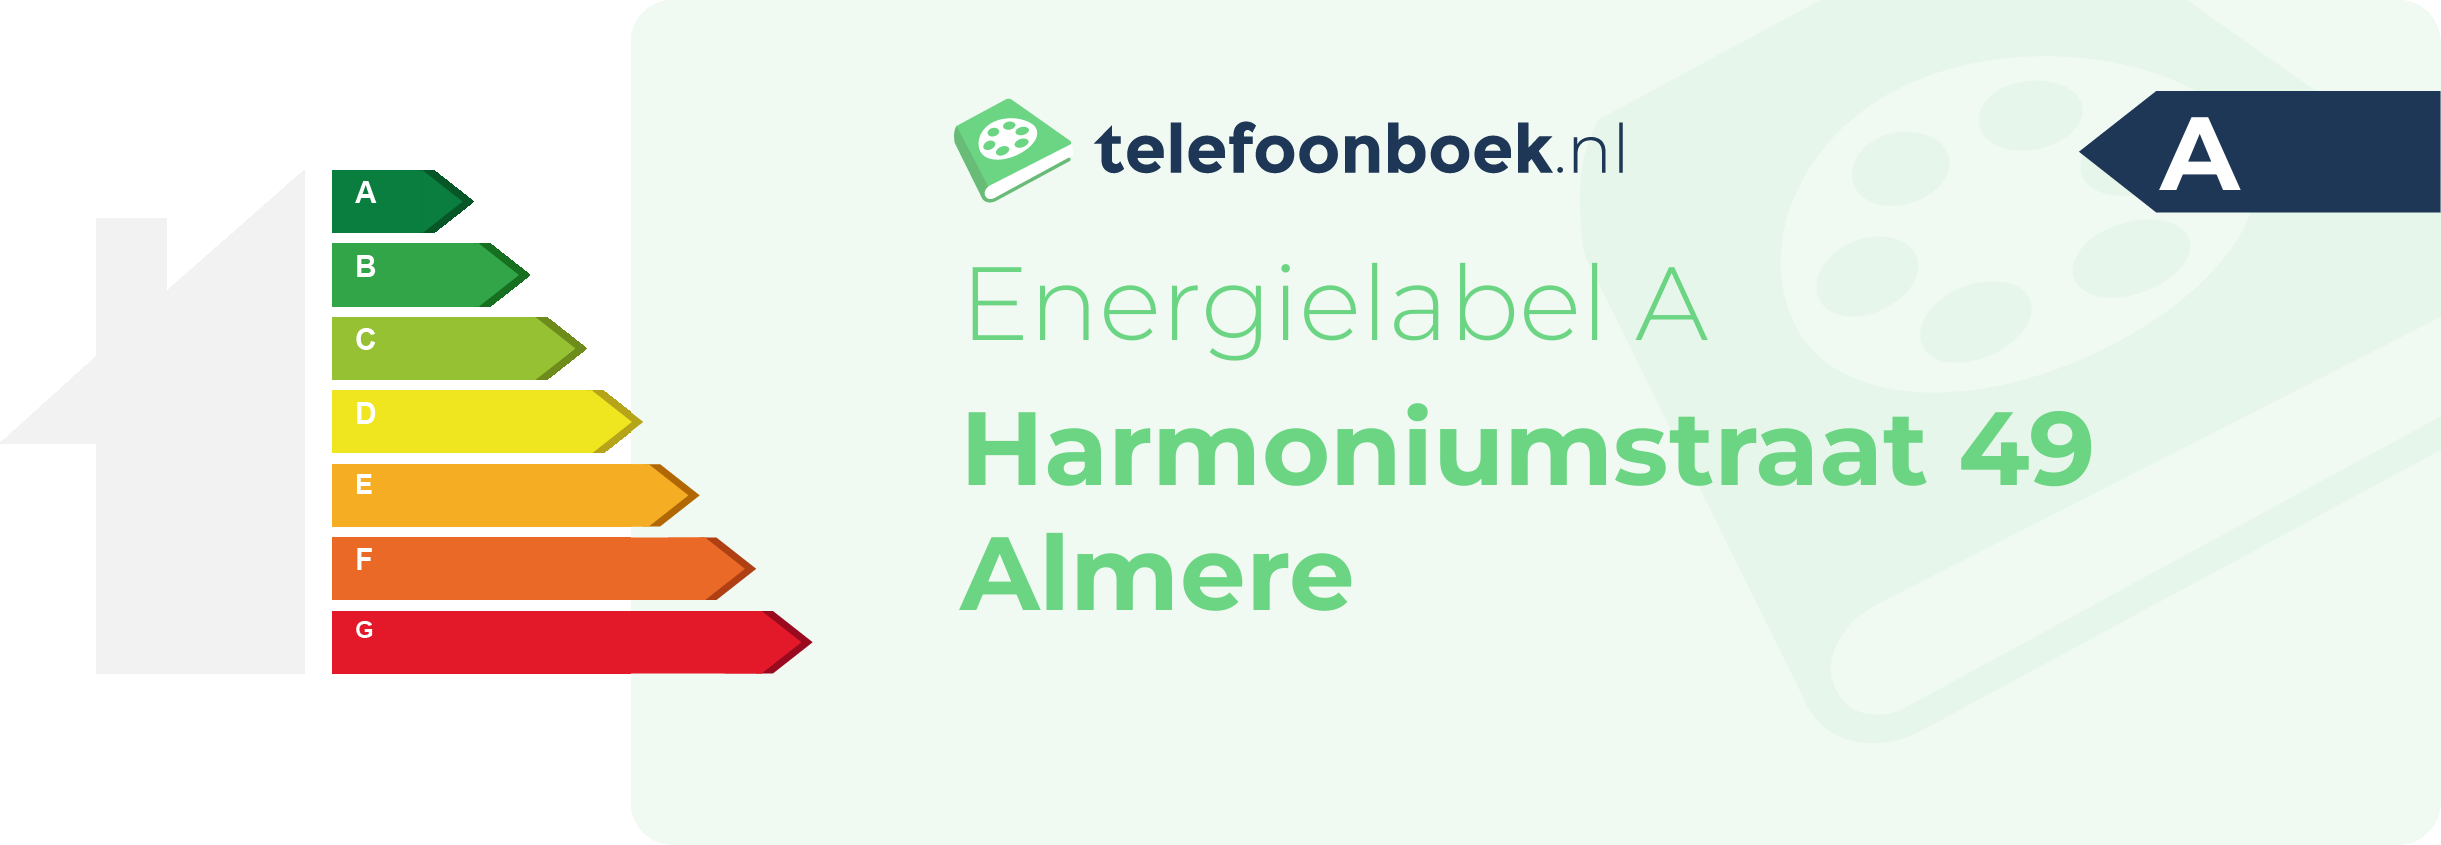 Energielabel Harmoniumstraat 49 Almere